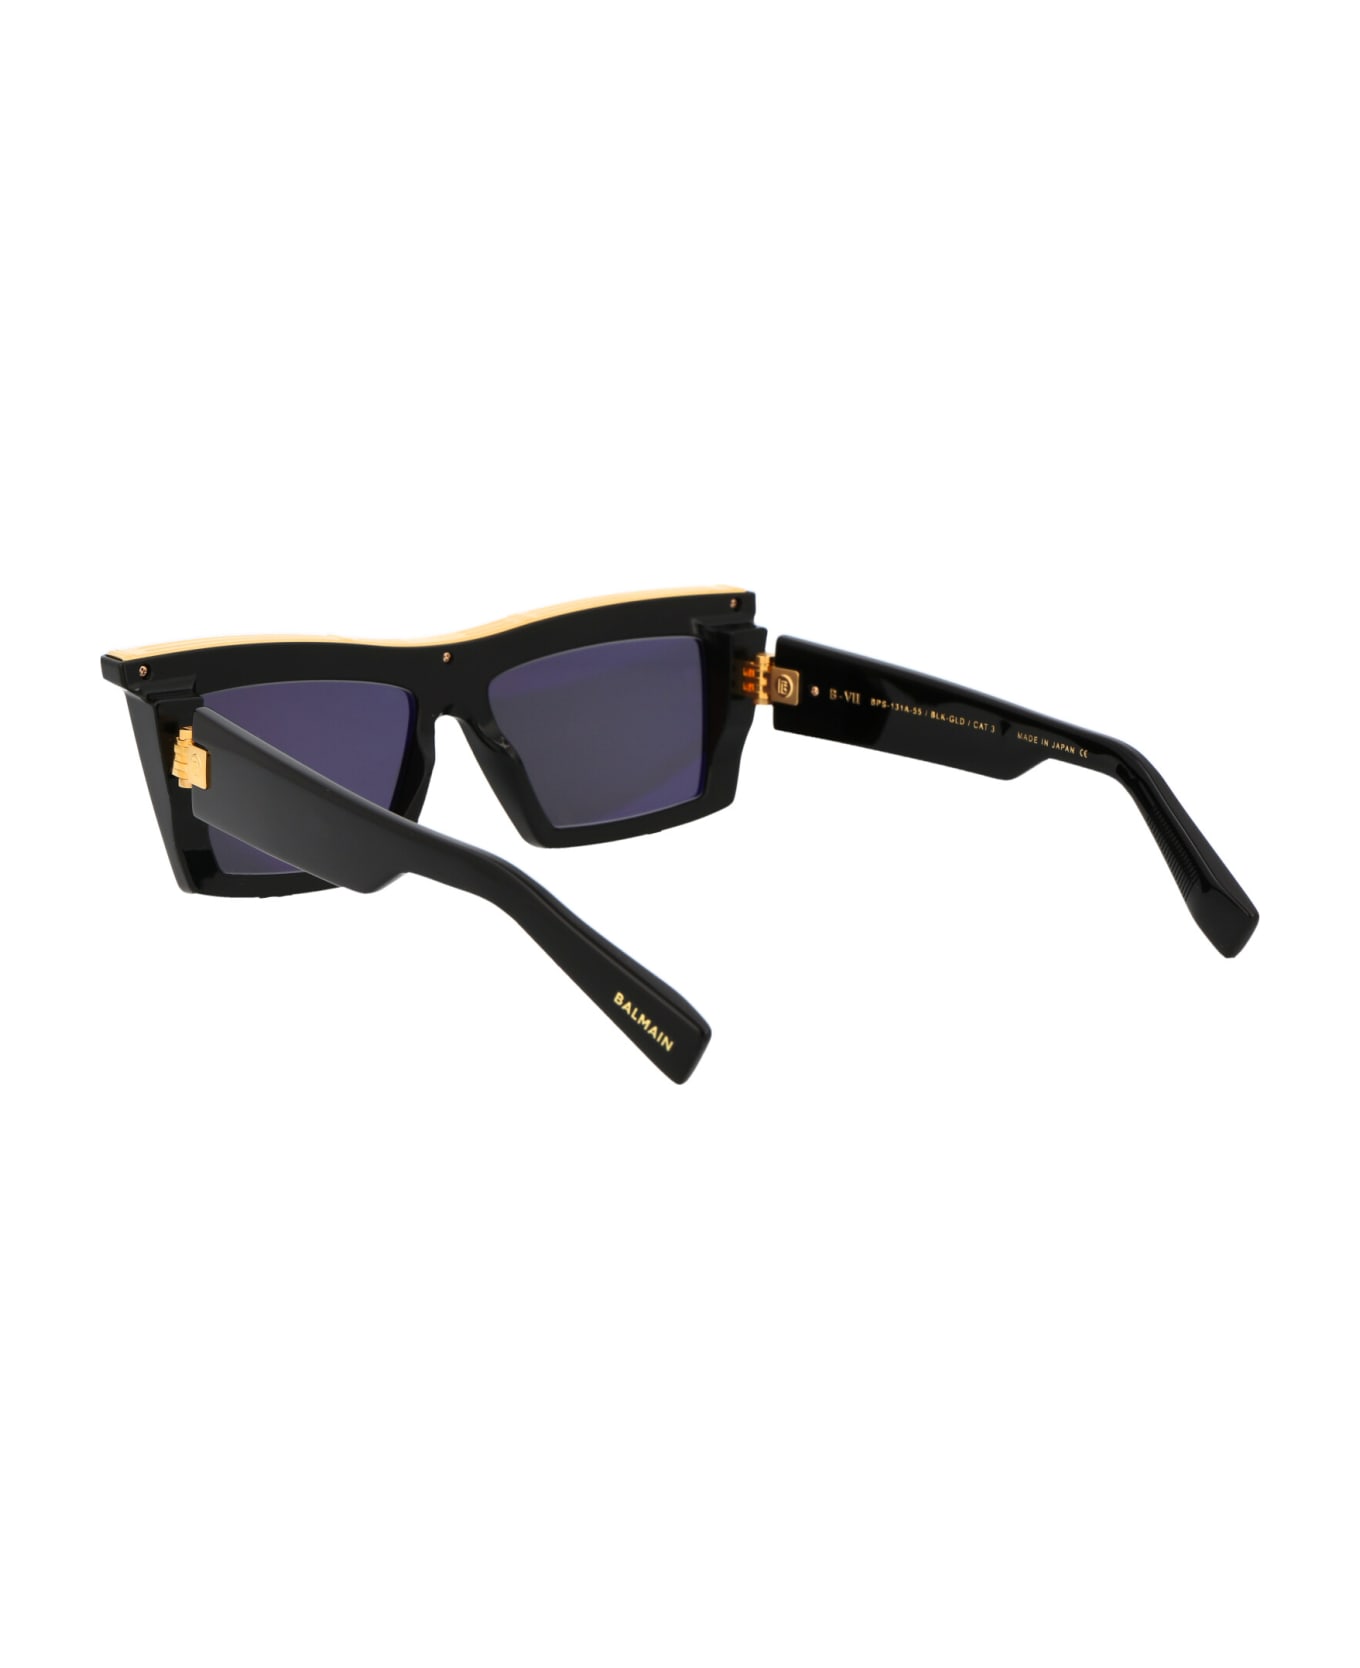 Balmain B-vii Sunglasses - BLACK GOLD